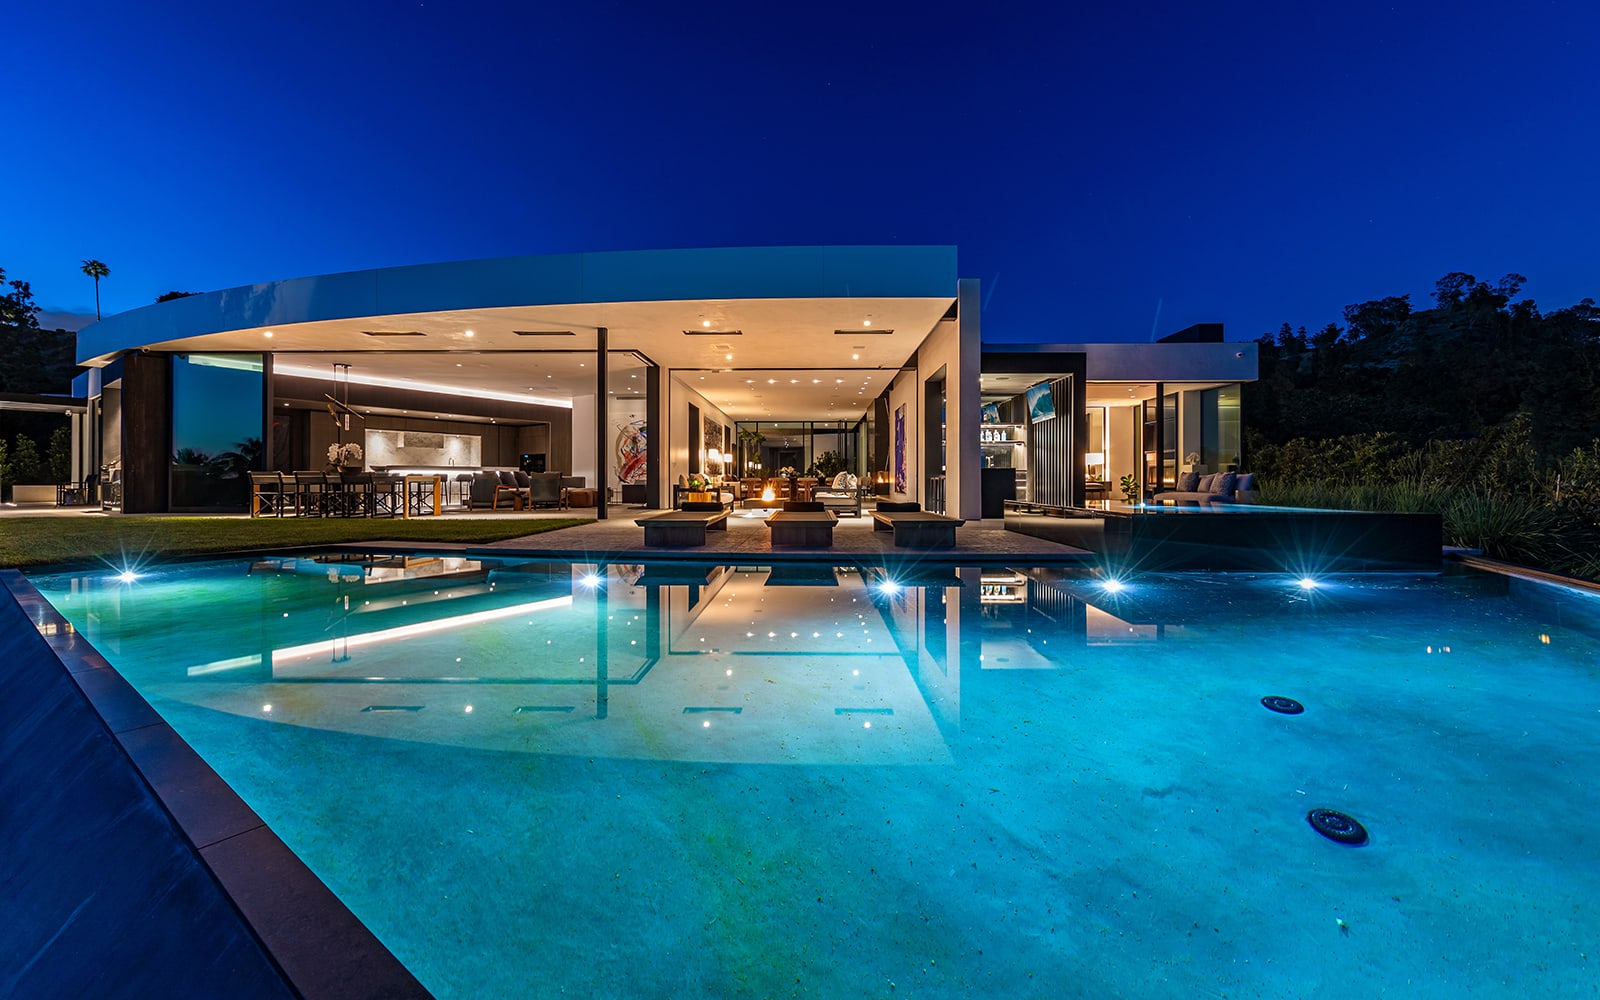 swimming pool nightime beverly hills luxury home